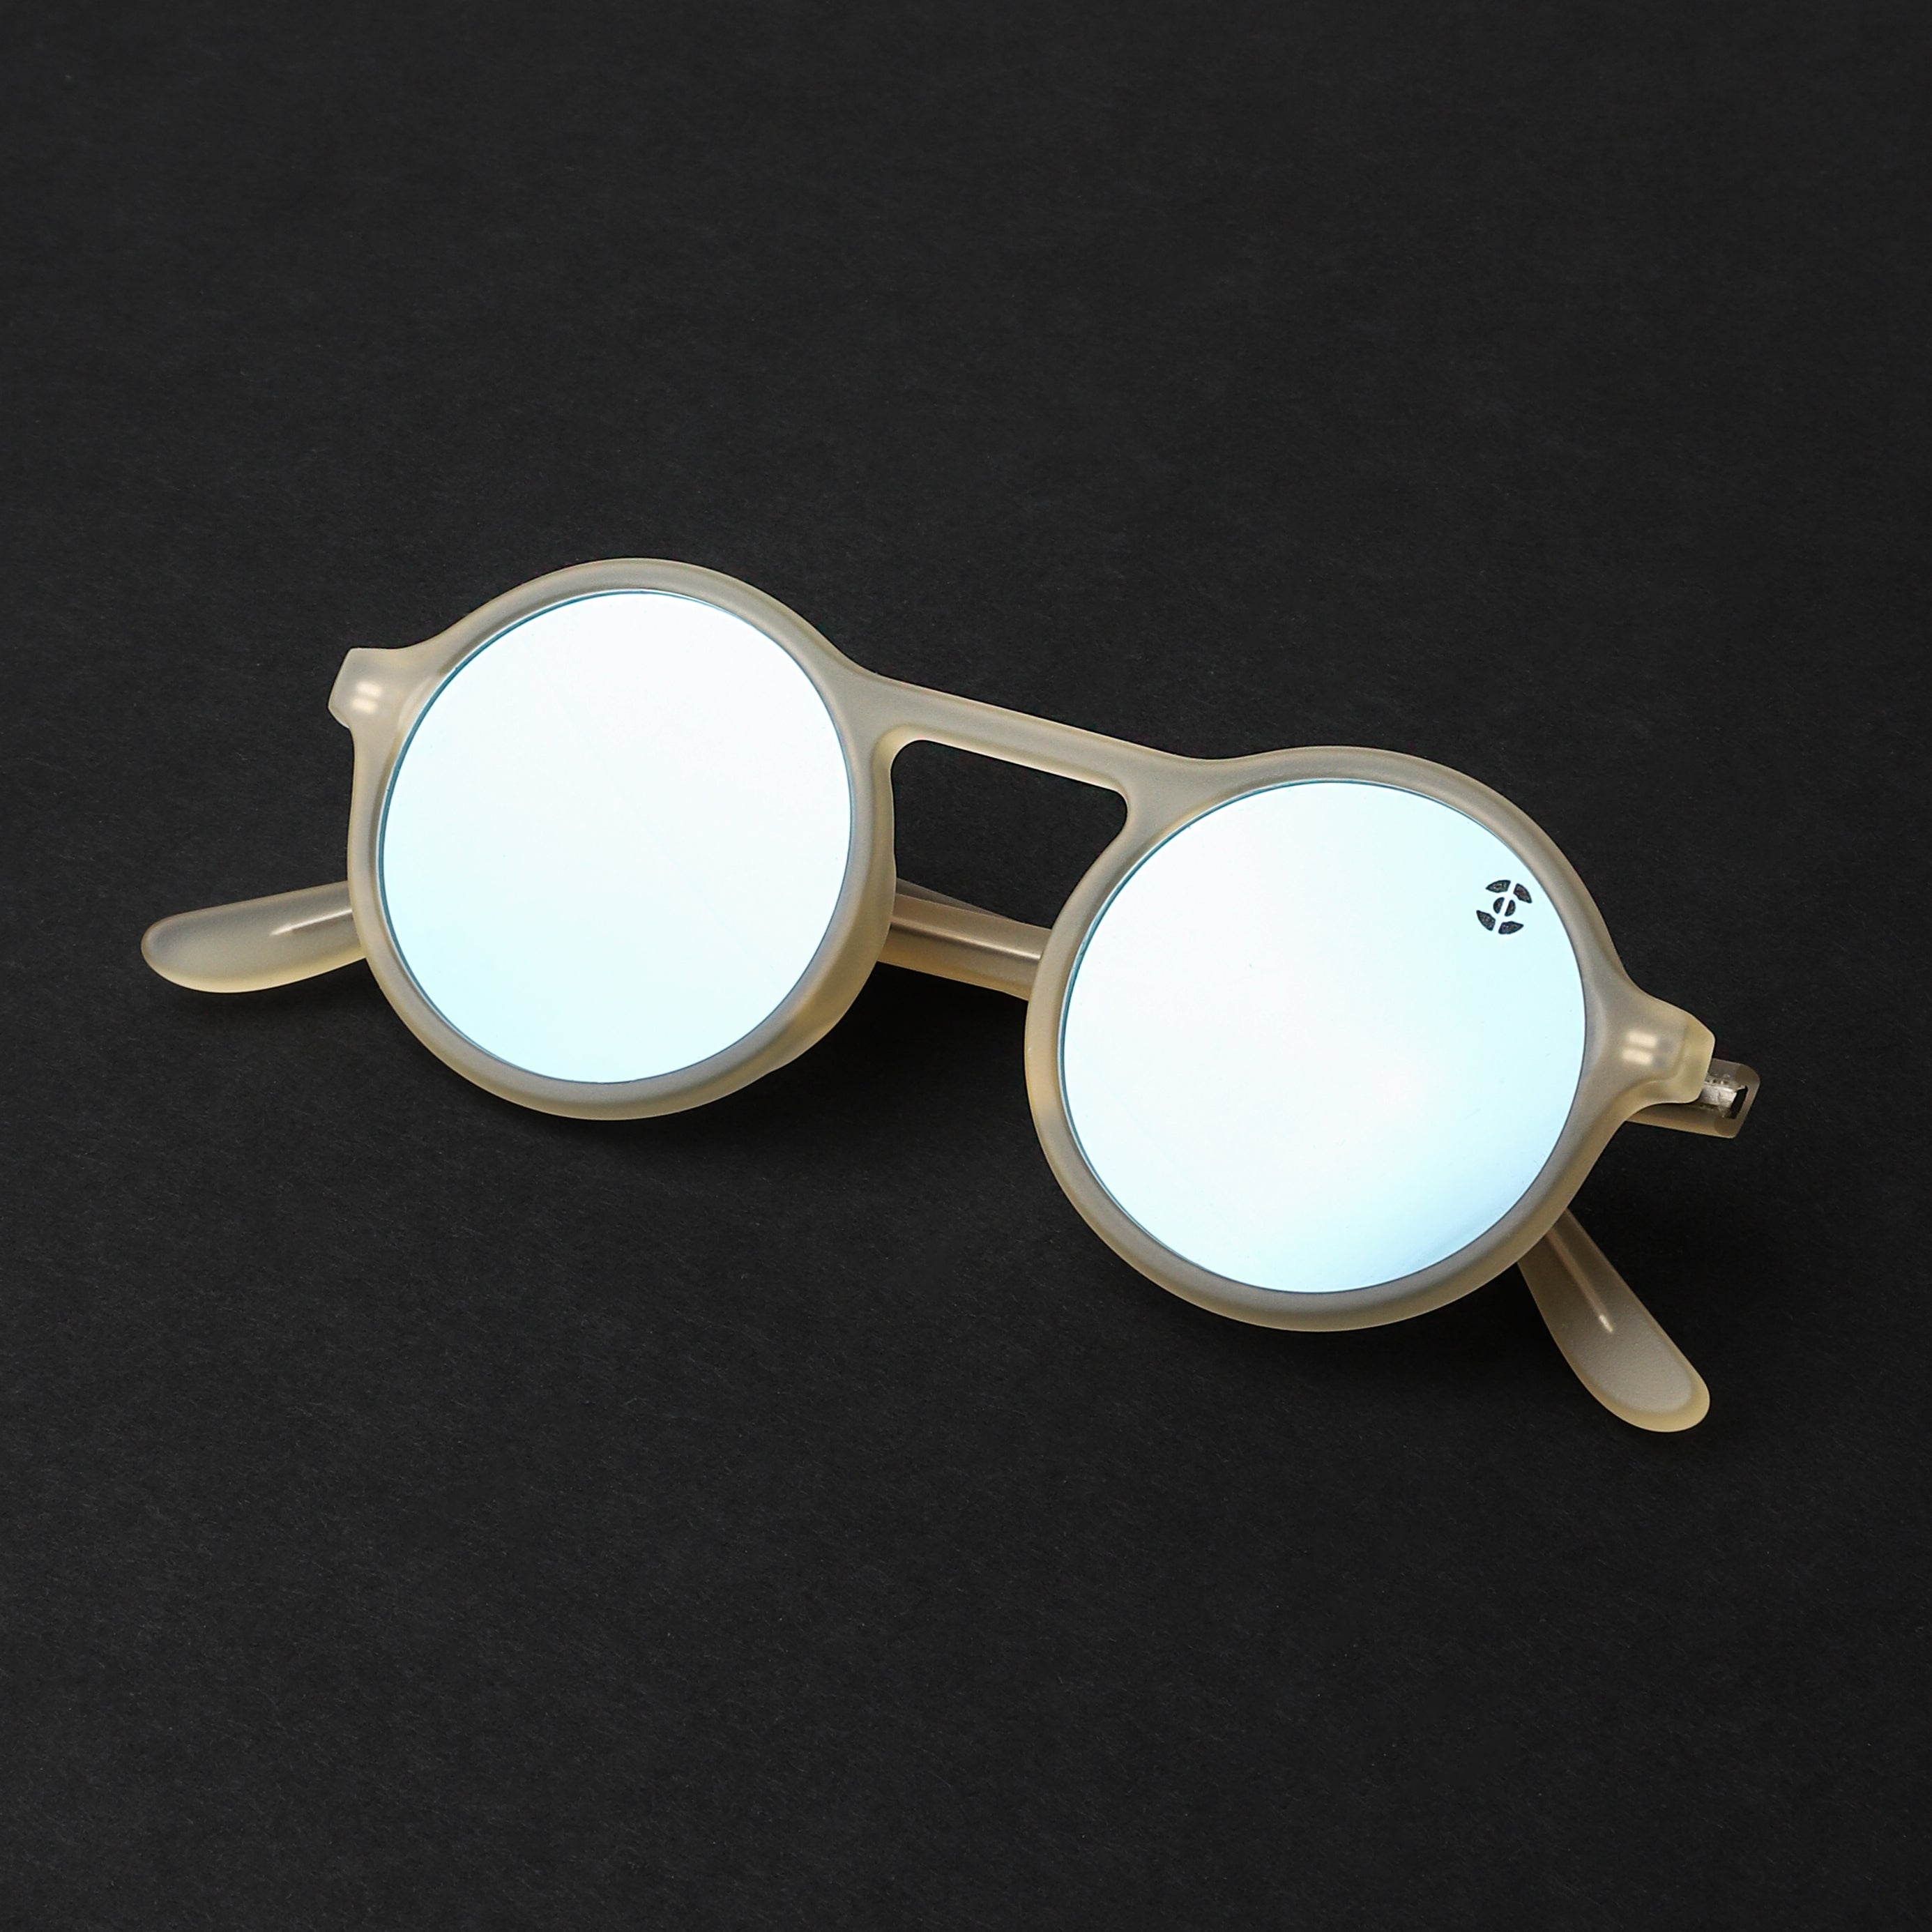 Dune x illesteva sunglasses shown with Silver Mirror lenses